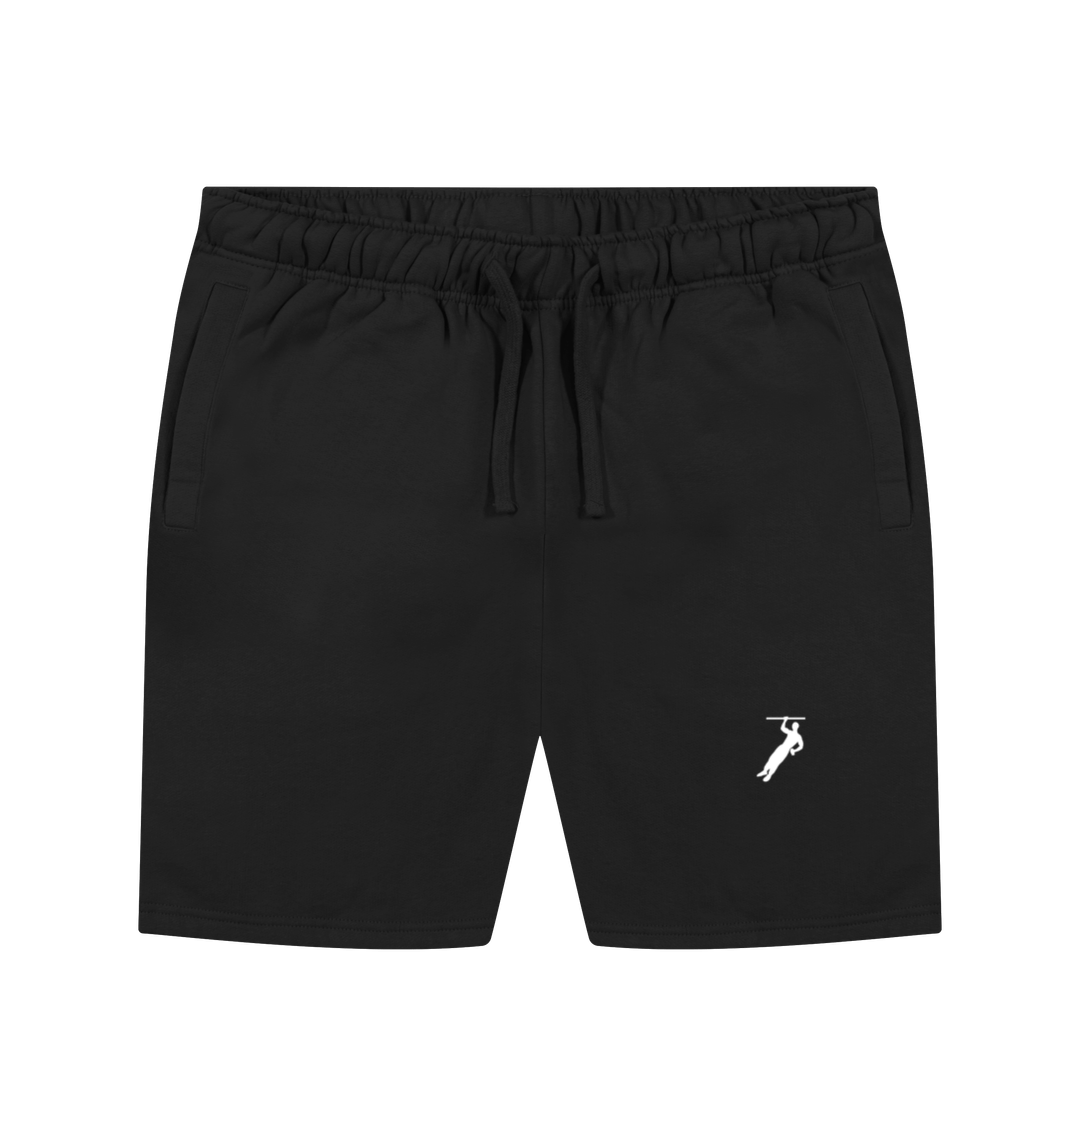 Black Men's Black Shorts with white printed logo